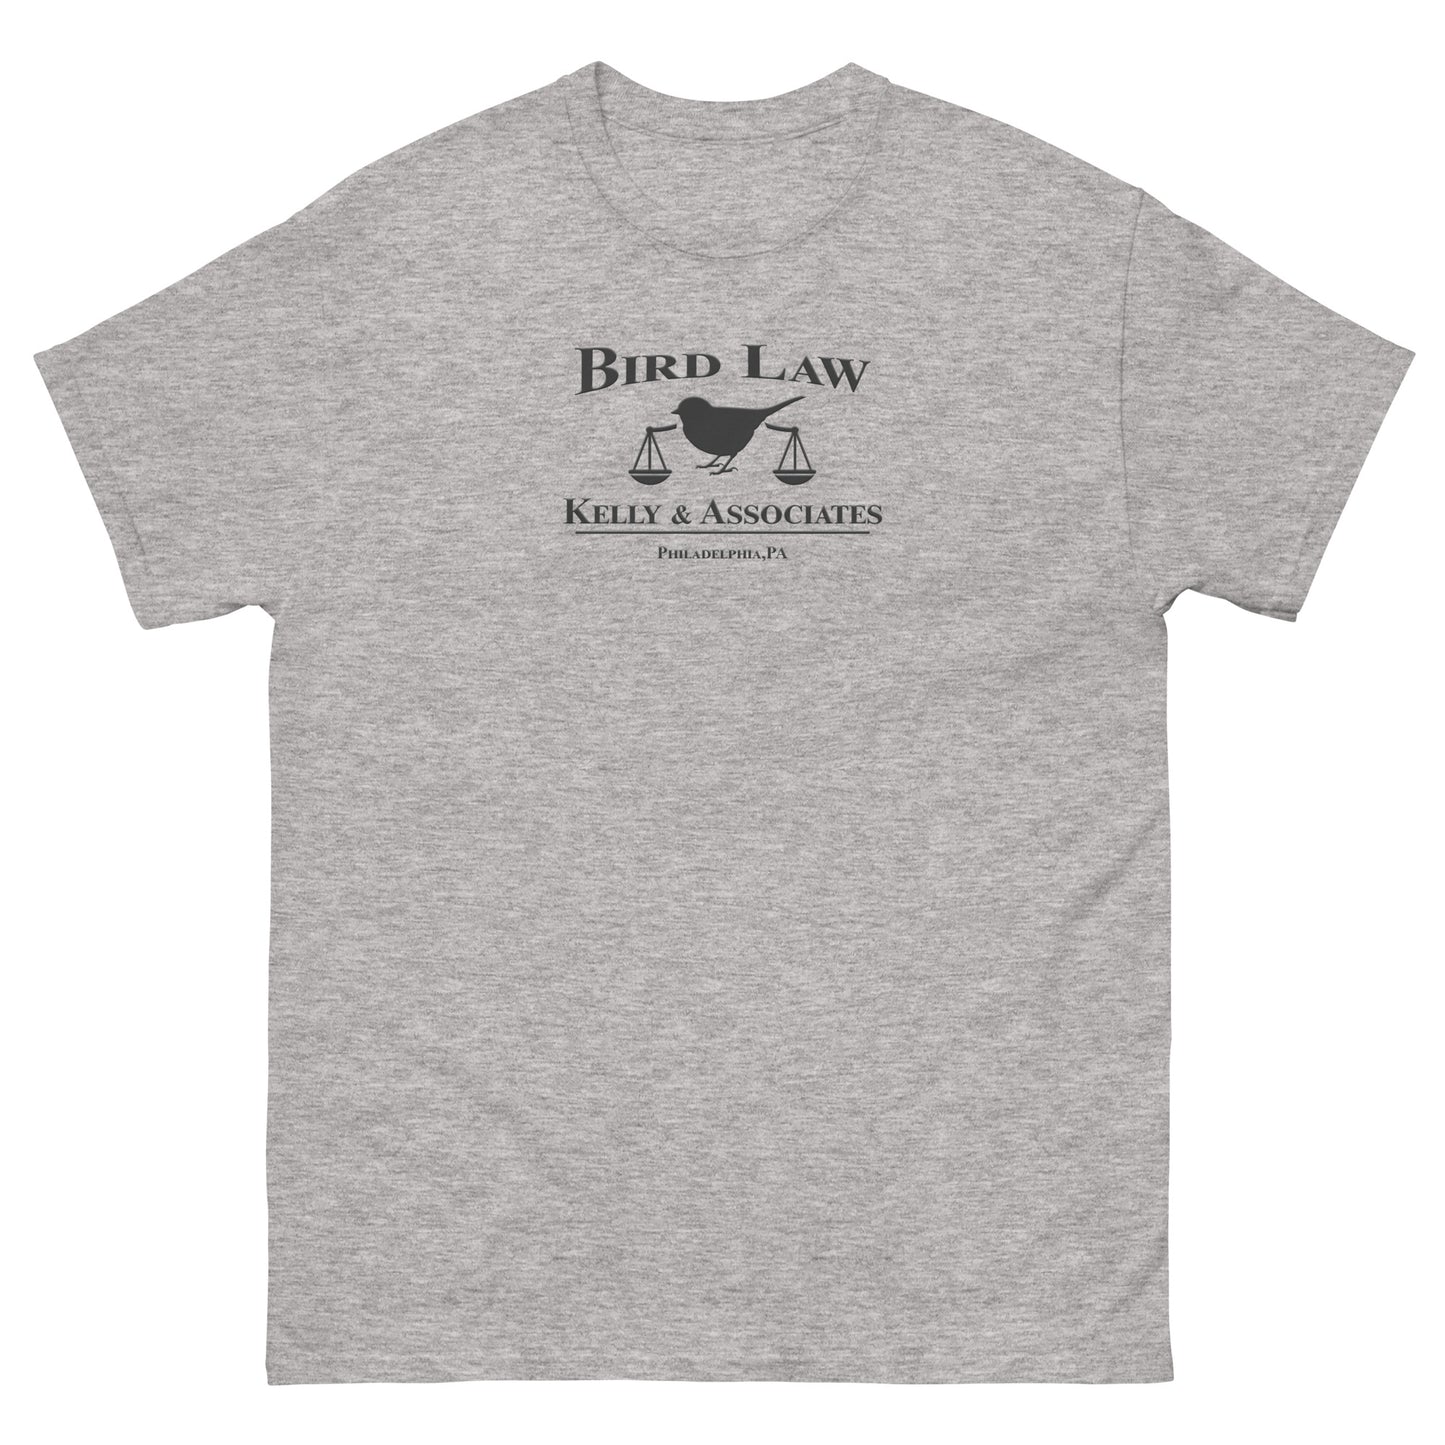 Bird Law Kelly and Associates (Black Logo)classic tee